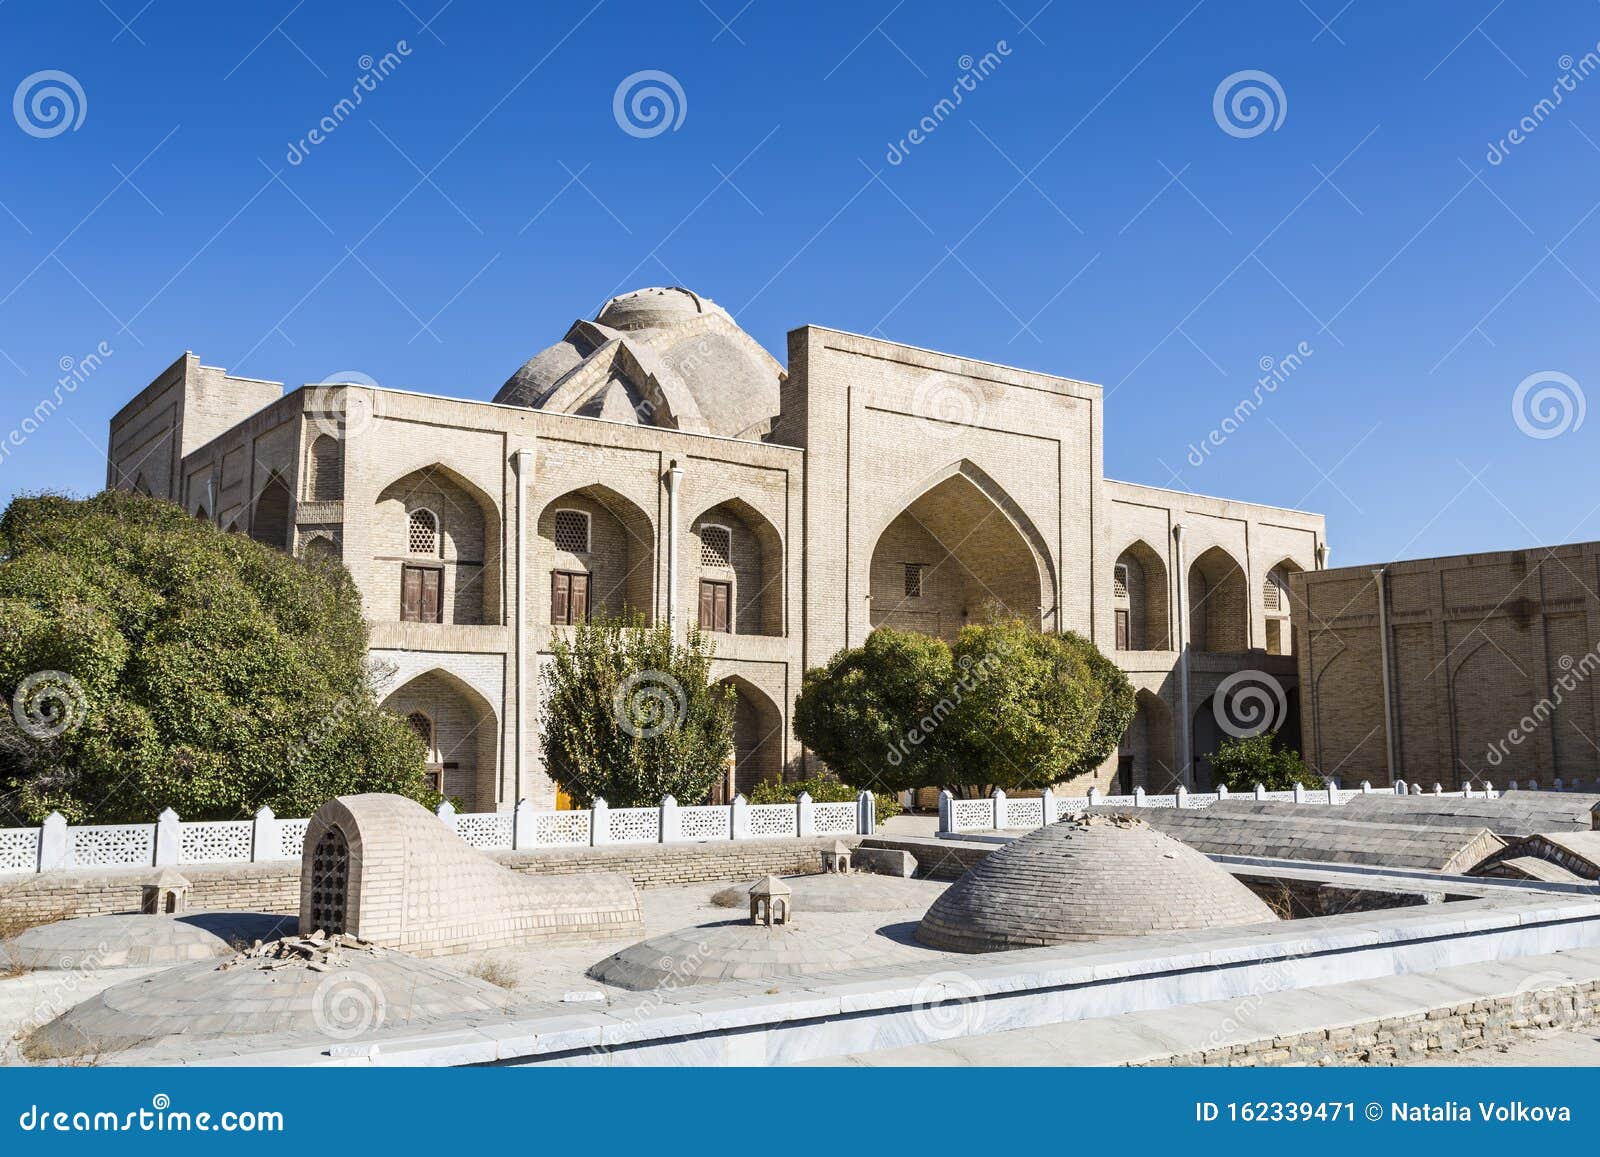 the muslim shrine, the mausoleum of bahauddin nakshbandi in bukhara,